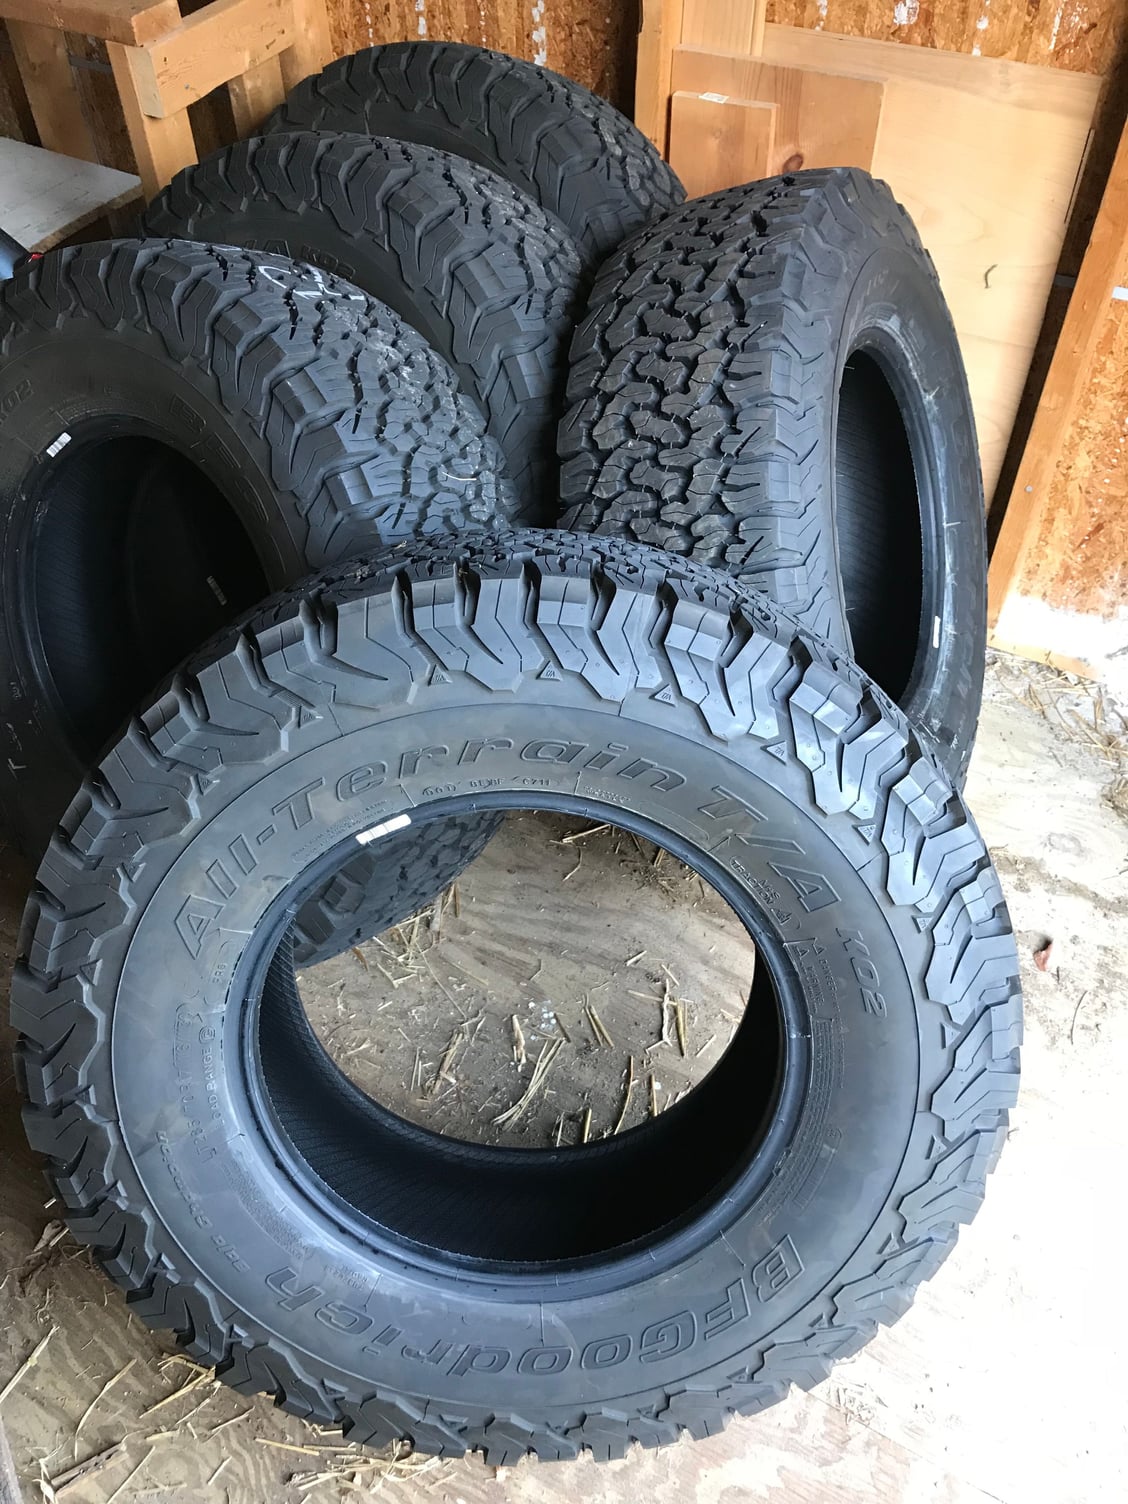 Wheels and Tires/Axles - 5x 285/70/r17 JLUR Take offs - BF Goodrich KO2's - 1,100 miles $750 - Used - Richmond, VA 23233, United States